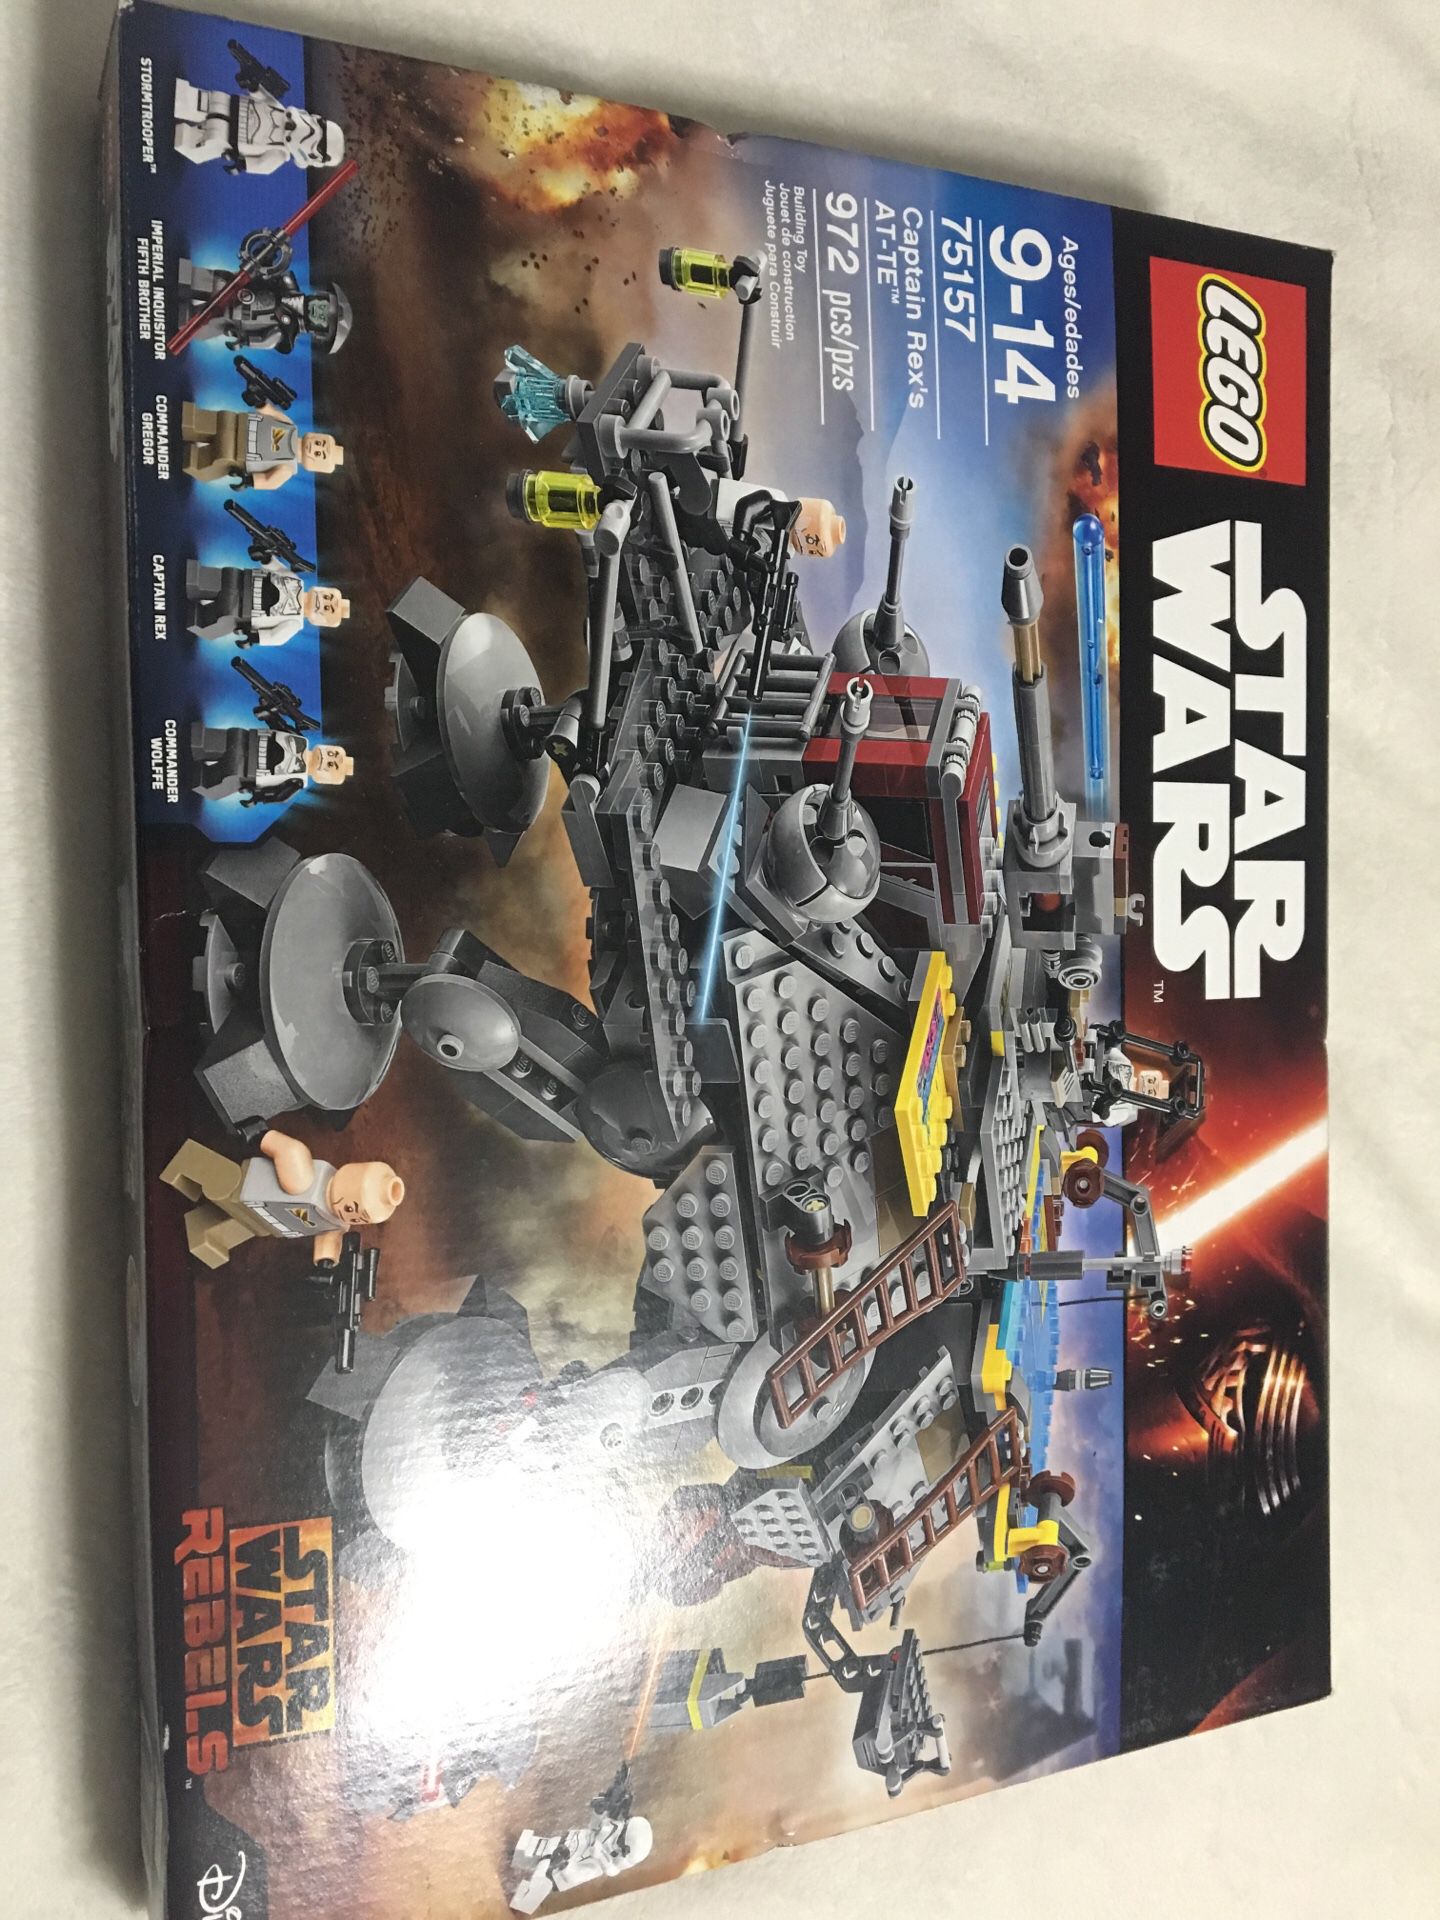 Lego 75157 Star Wars Captain Rex’s AT-TE